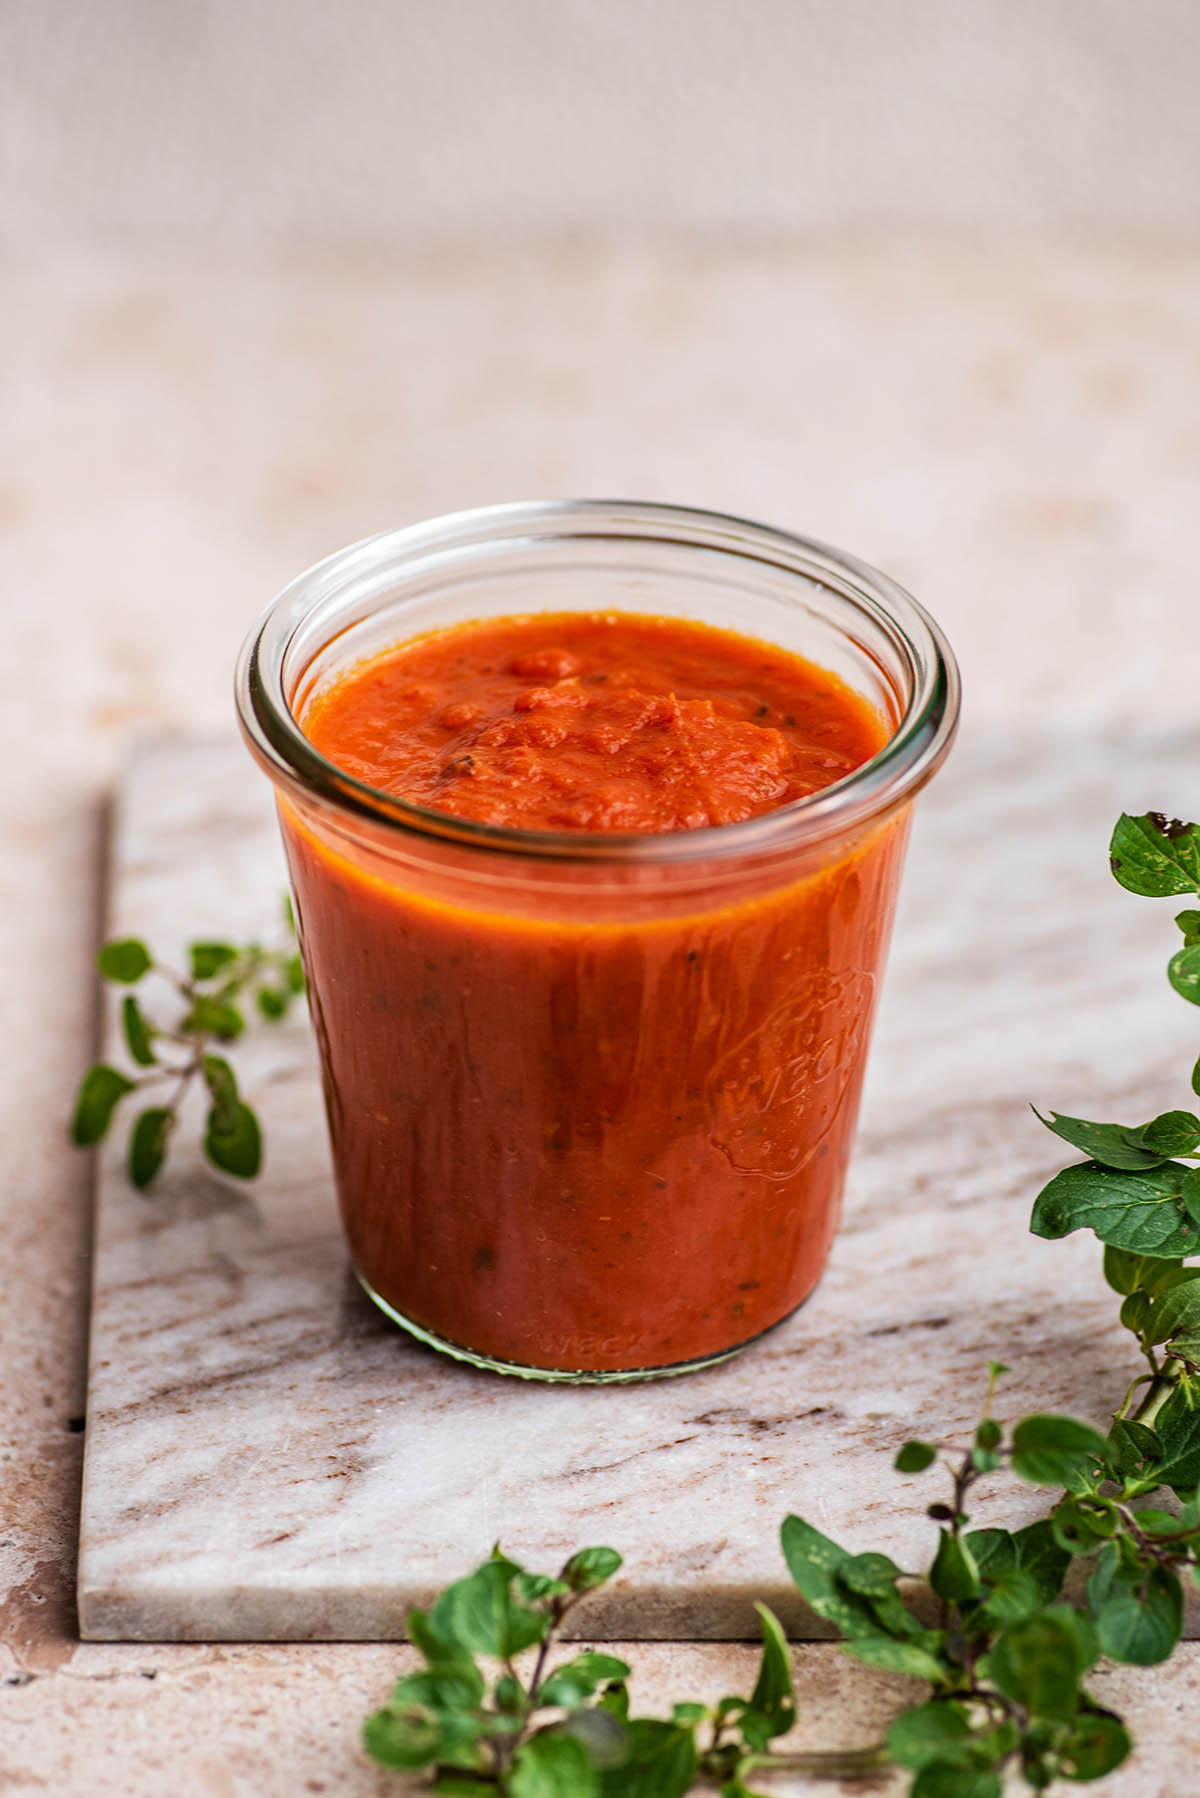 Tomato sauce in a glass jar with oregano around.